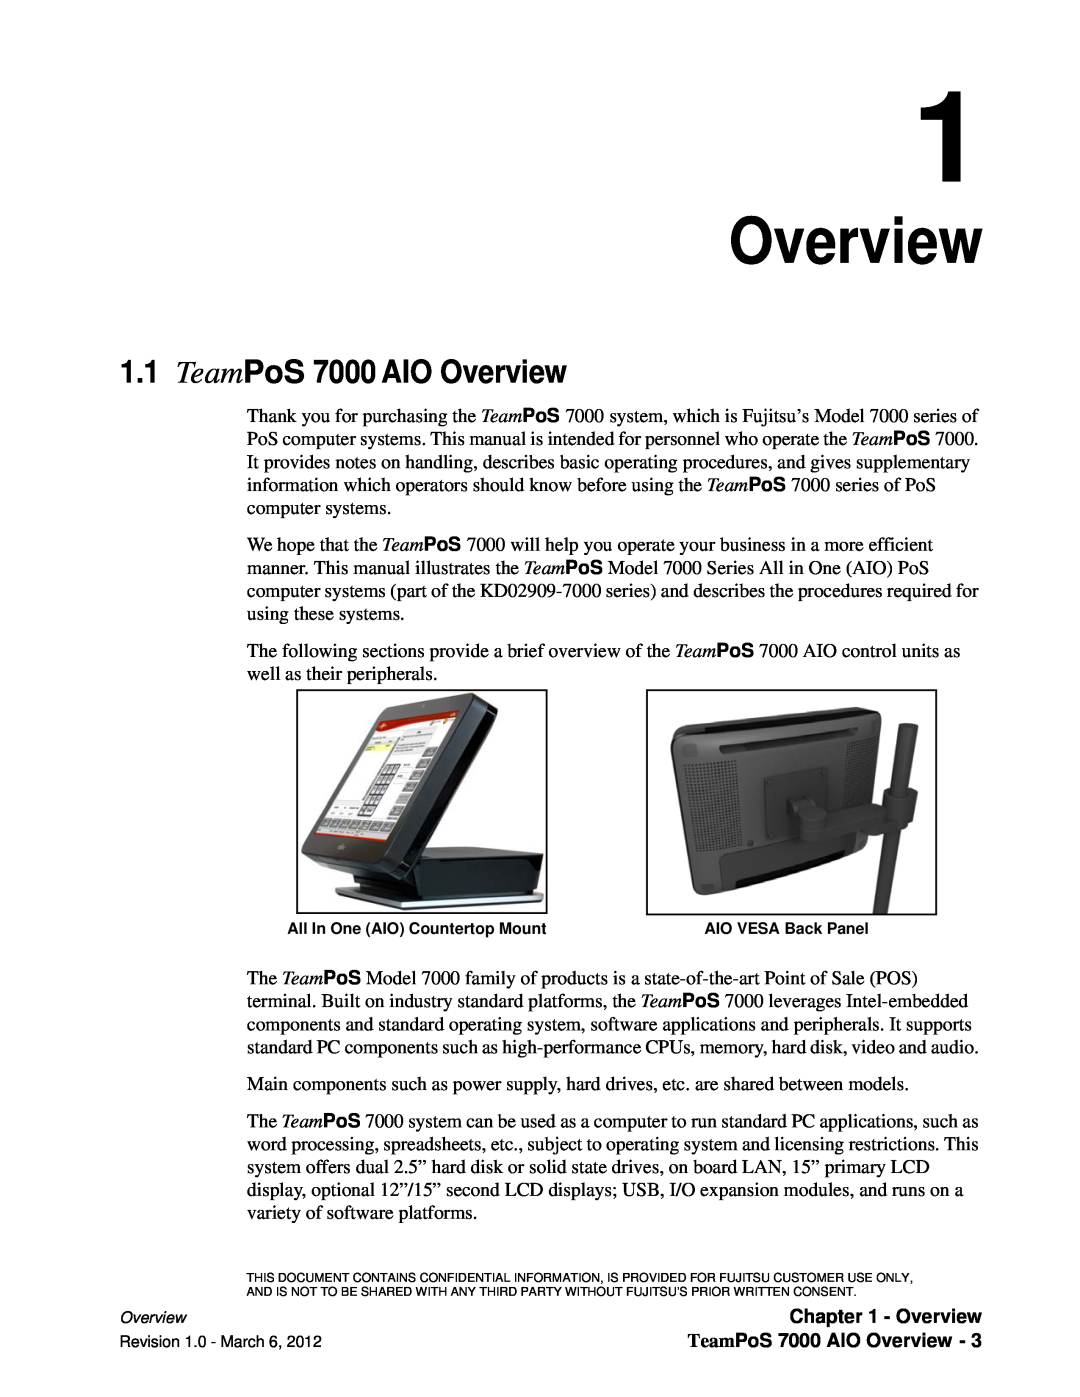 Fujitsu manual TeamPoS 7000 AIO Overview 